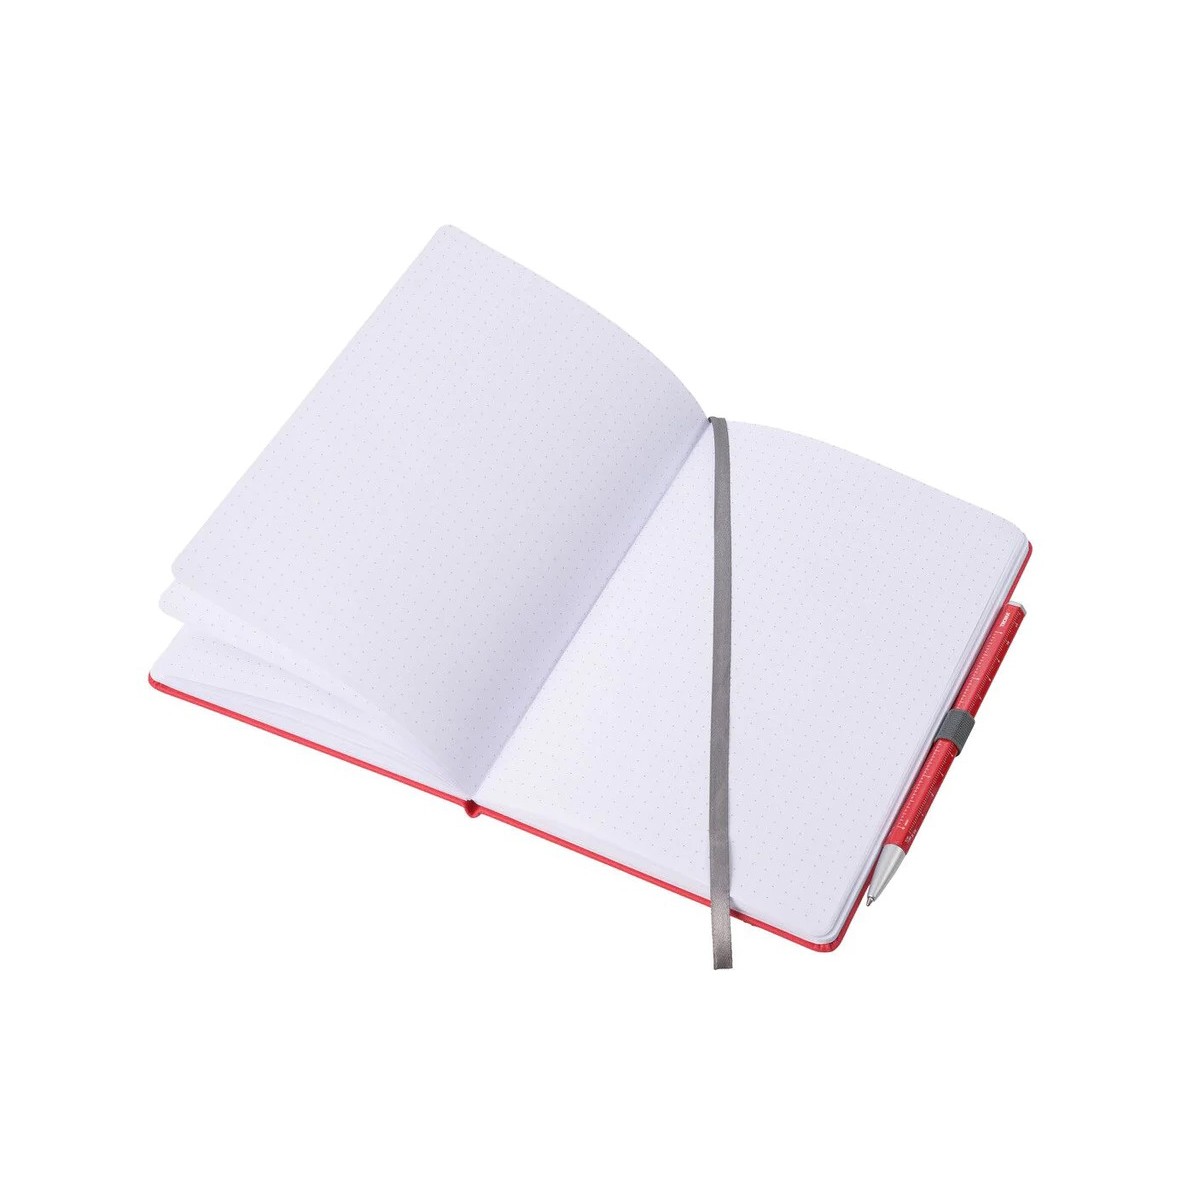 Troika Σημειωματάριο Slimpad A5 & Στυλό Construction - Κόκκινο